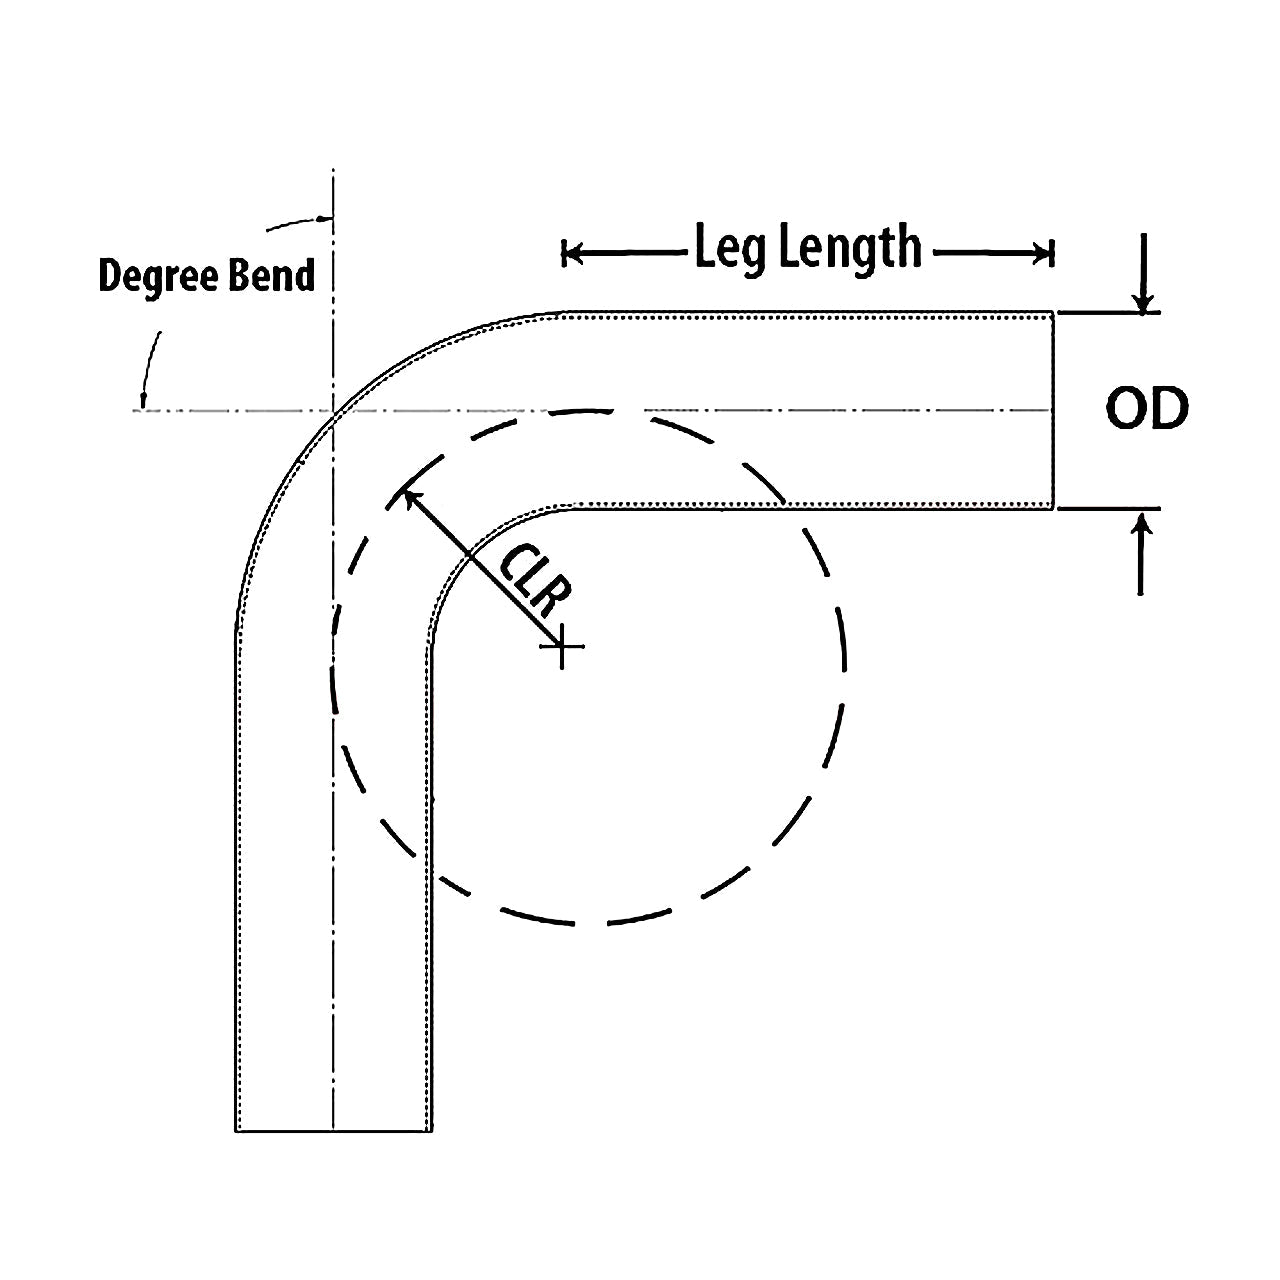 HPS 2-1/2" 120 Degree Bend 6061 Aluminum Elbow Pipe Tubing with 2-1/2" Center Line Radius